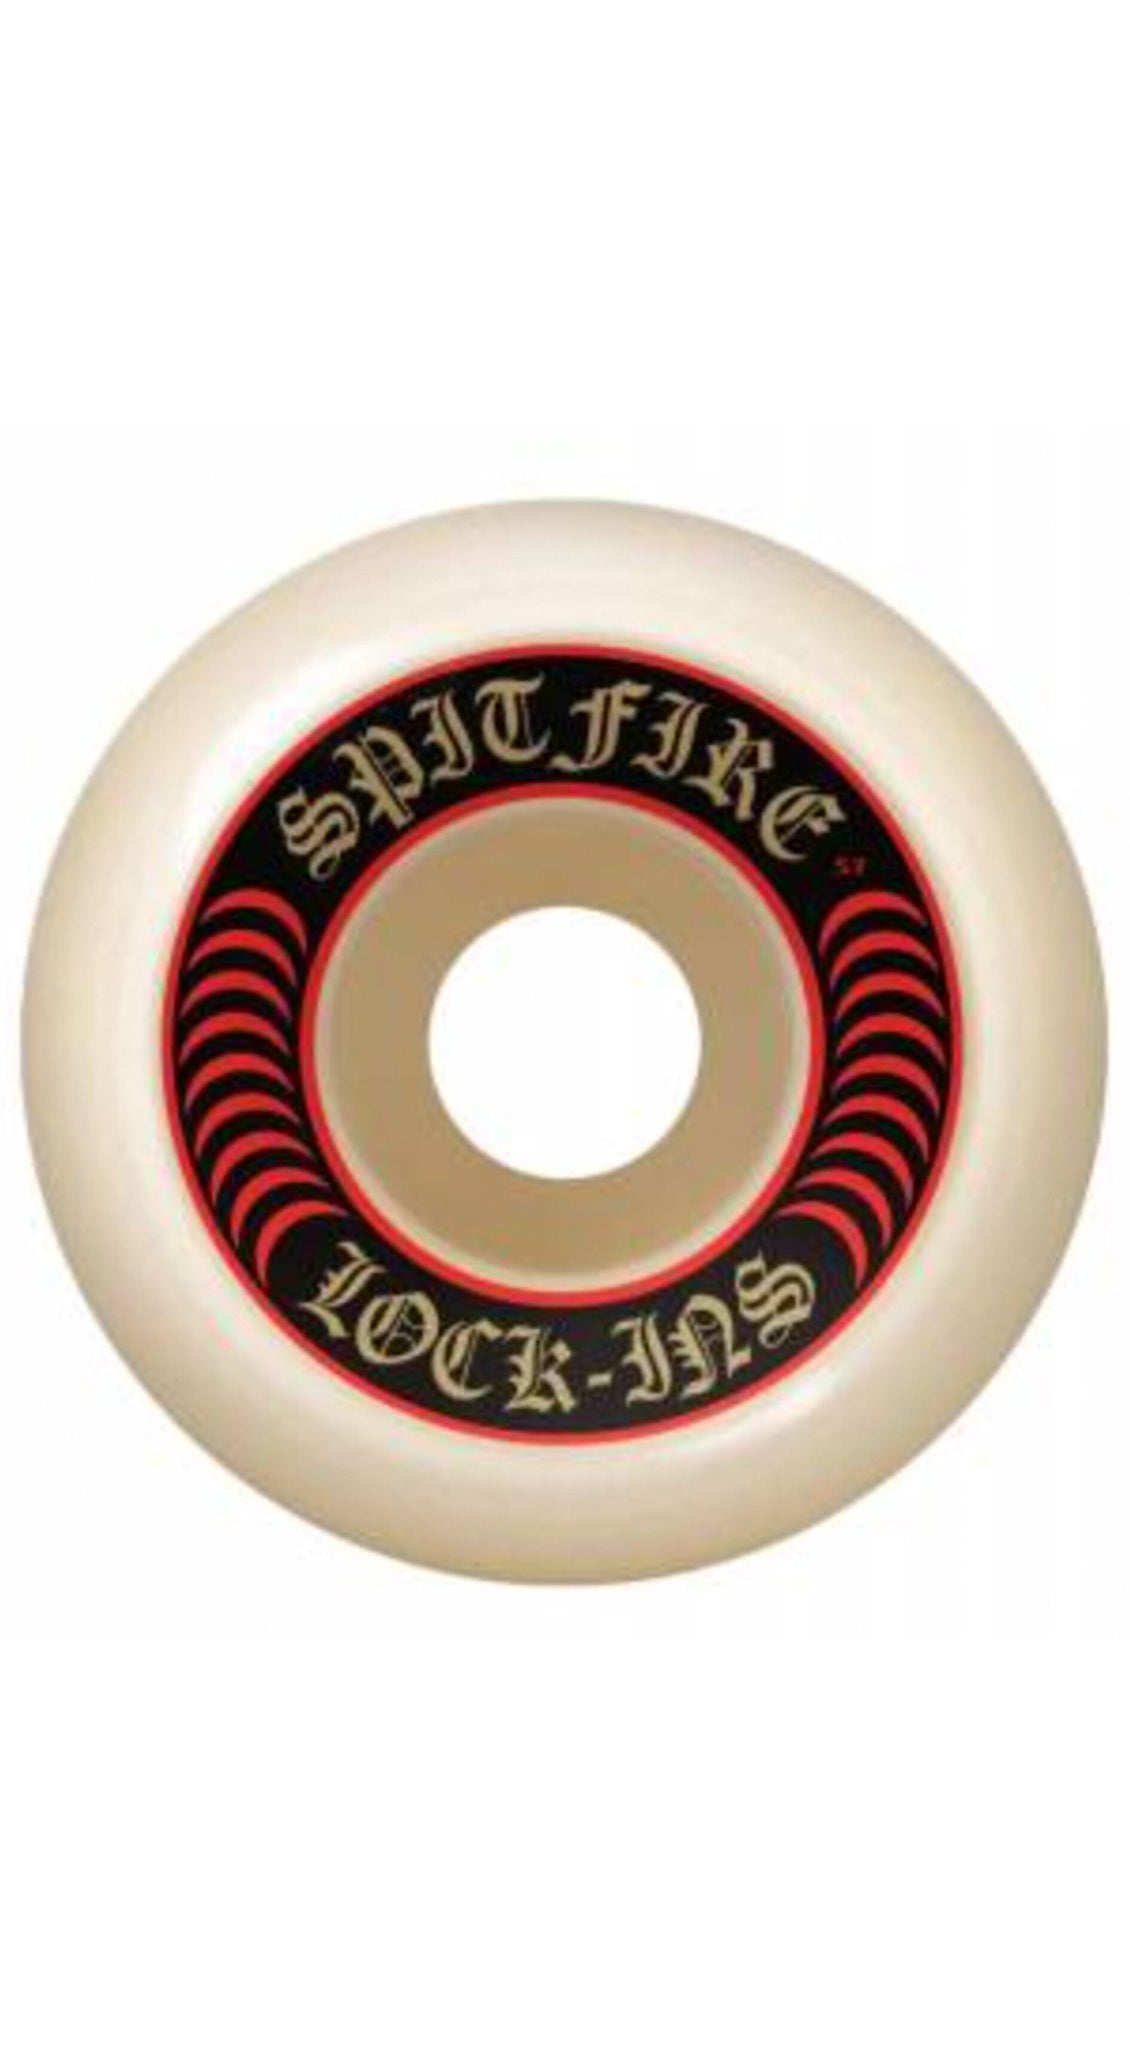 Spitfire F4 Lock In 55mm 101A Skateboard Wheels- Ruedas Ruedas Spitfire 